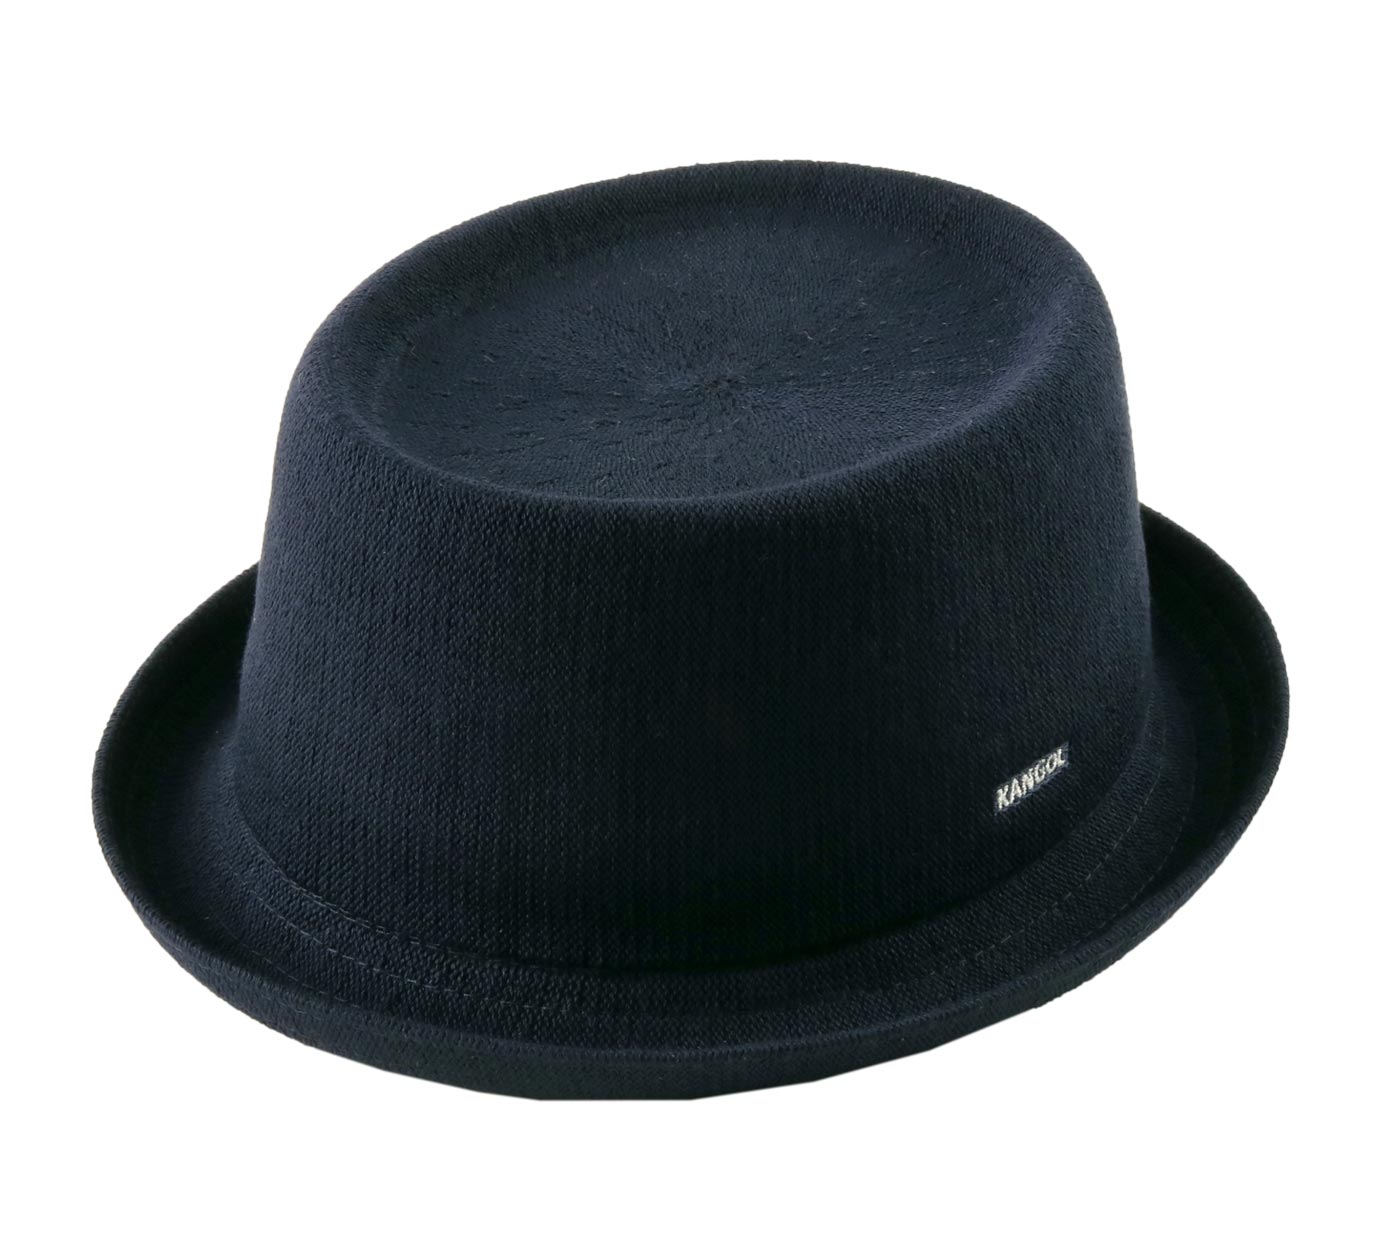 Kangol Headwear Wool Mowbray Porkpie Hat 